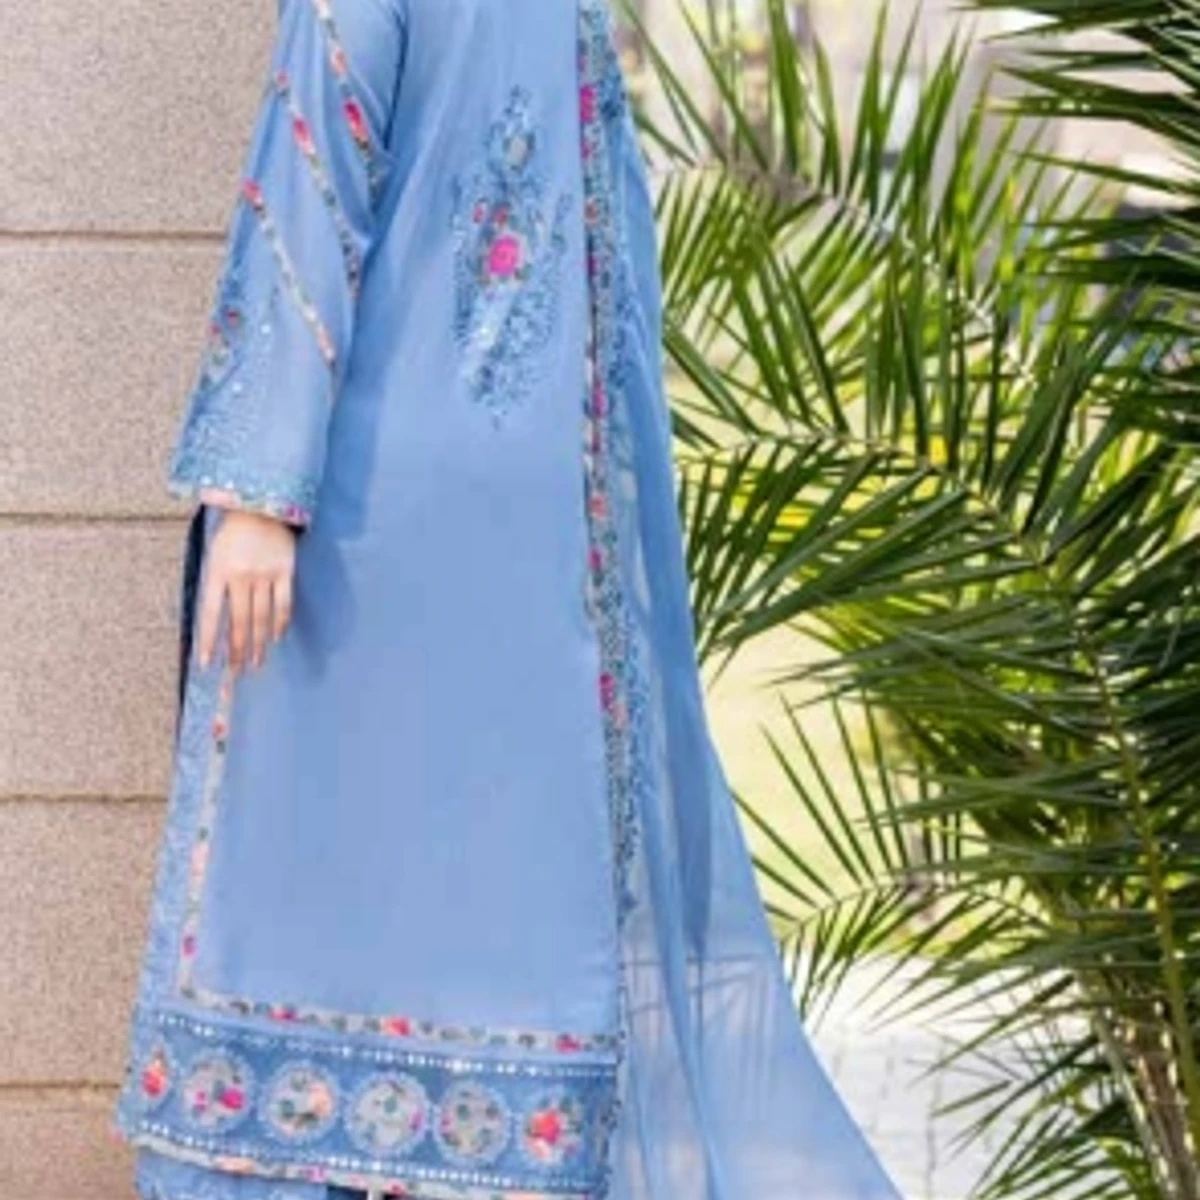 Most demanding Pakistani collection swiss miss Full Set Colour Guarantee-DeepAzure Colour WM032